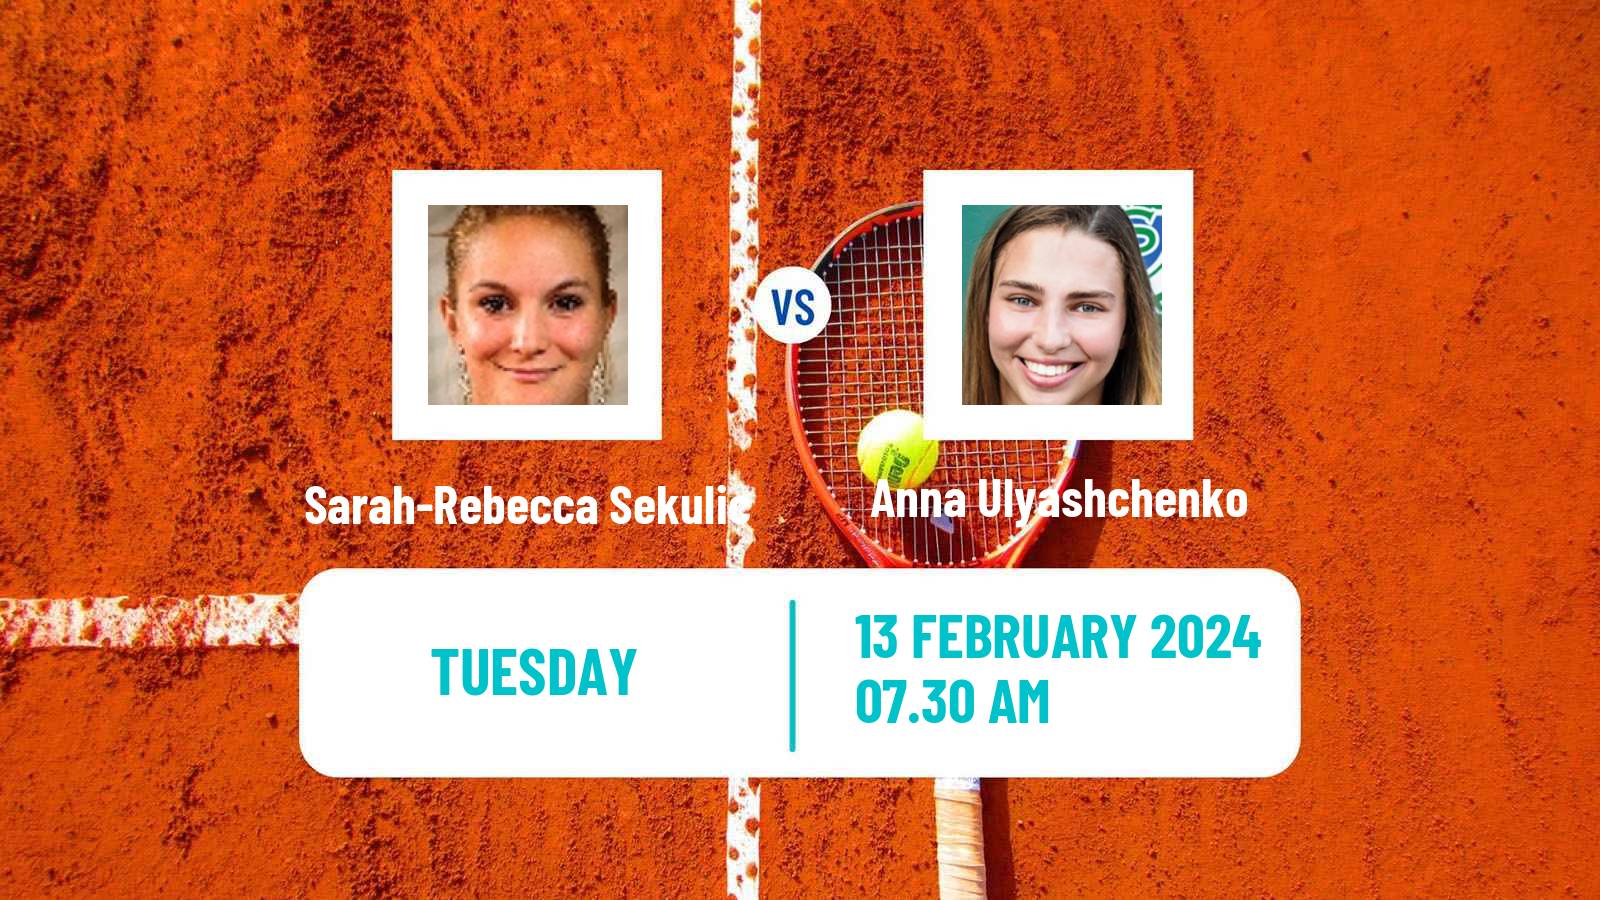 Tennis ITF W15 Manacor Women Sarah-Rebecca Sekulic - Anna Ulyashchenko